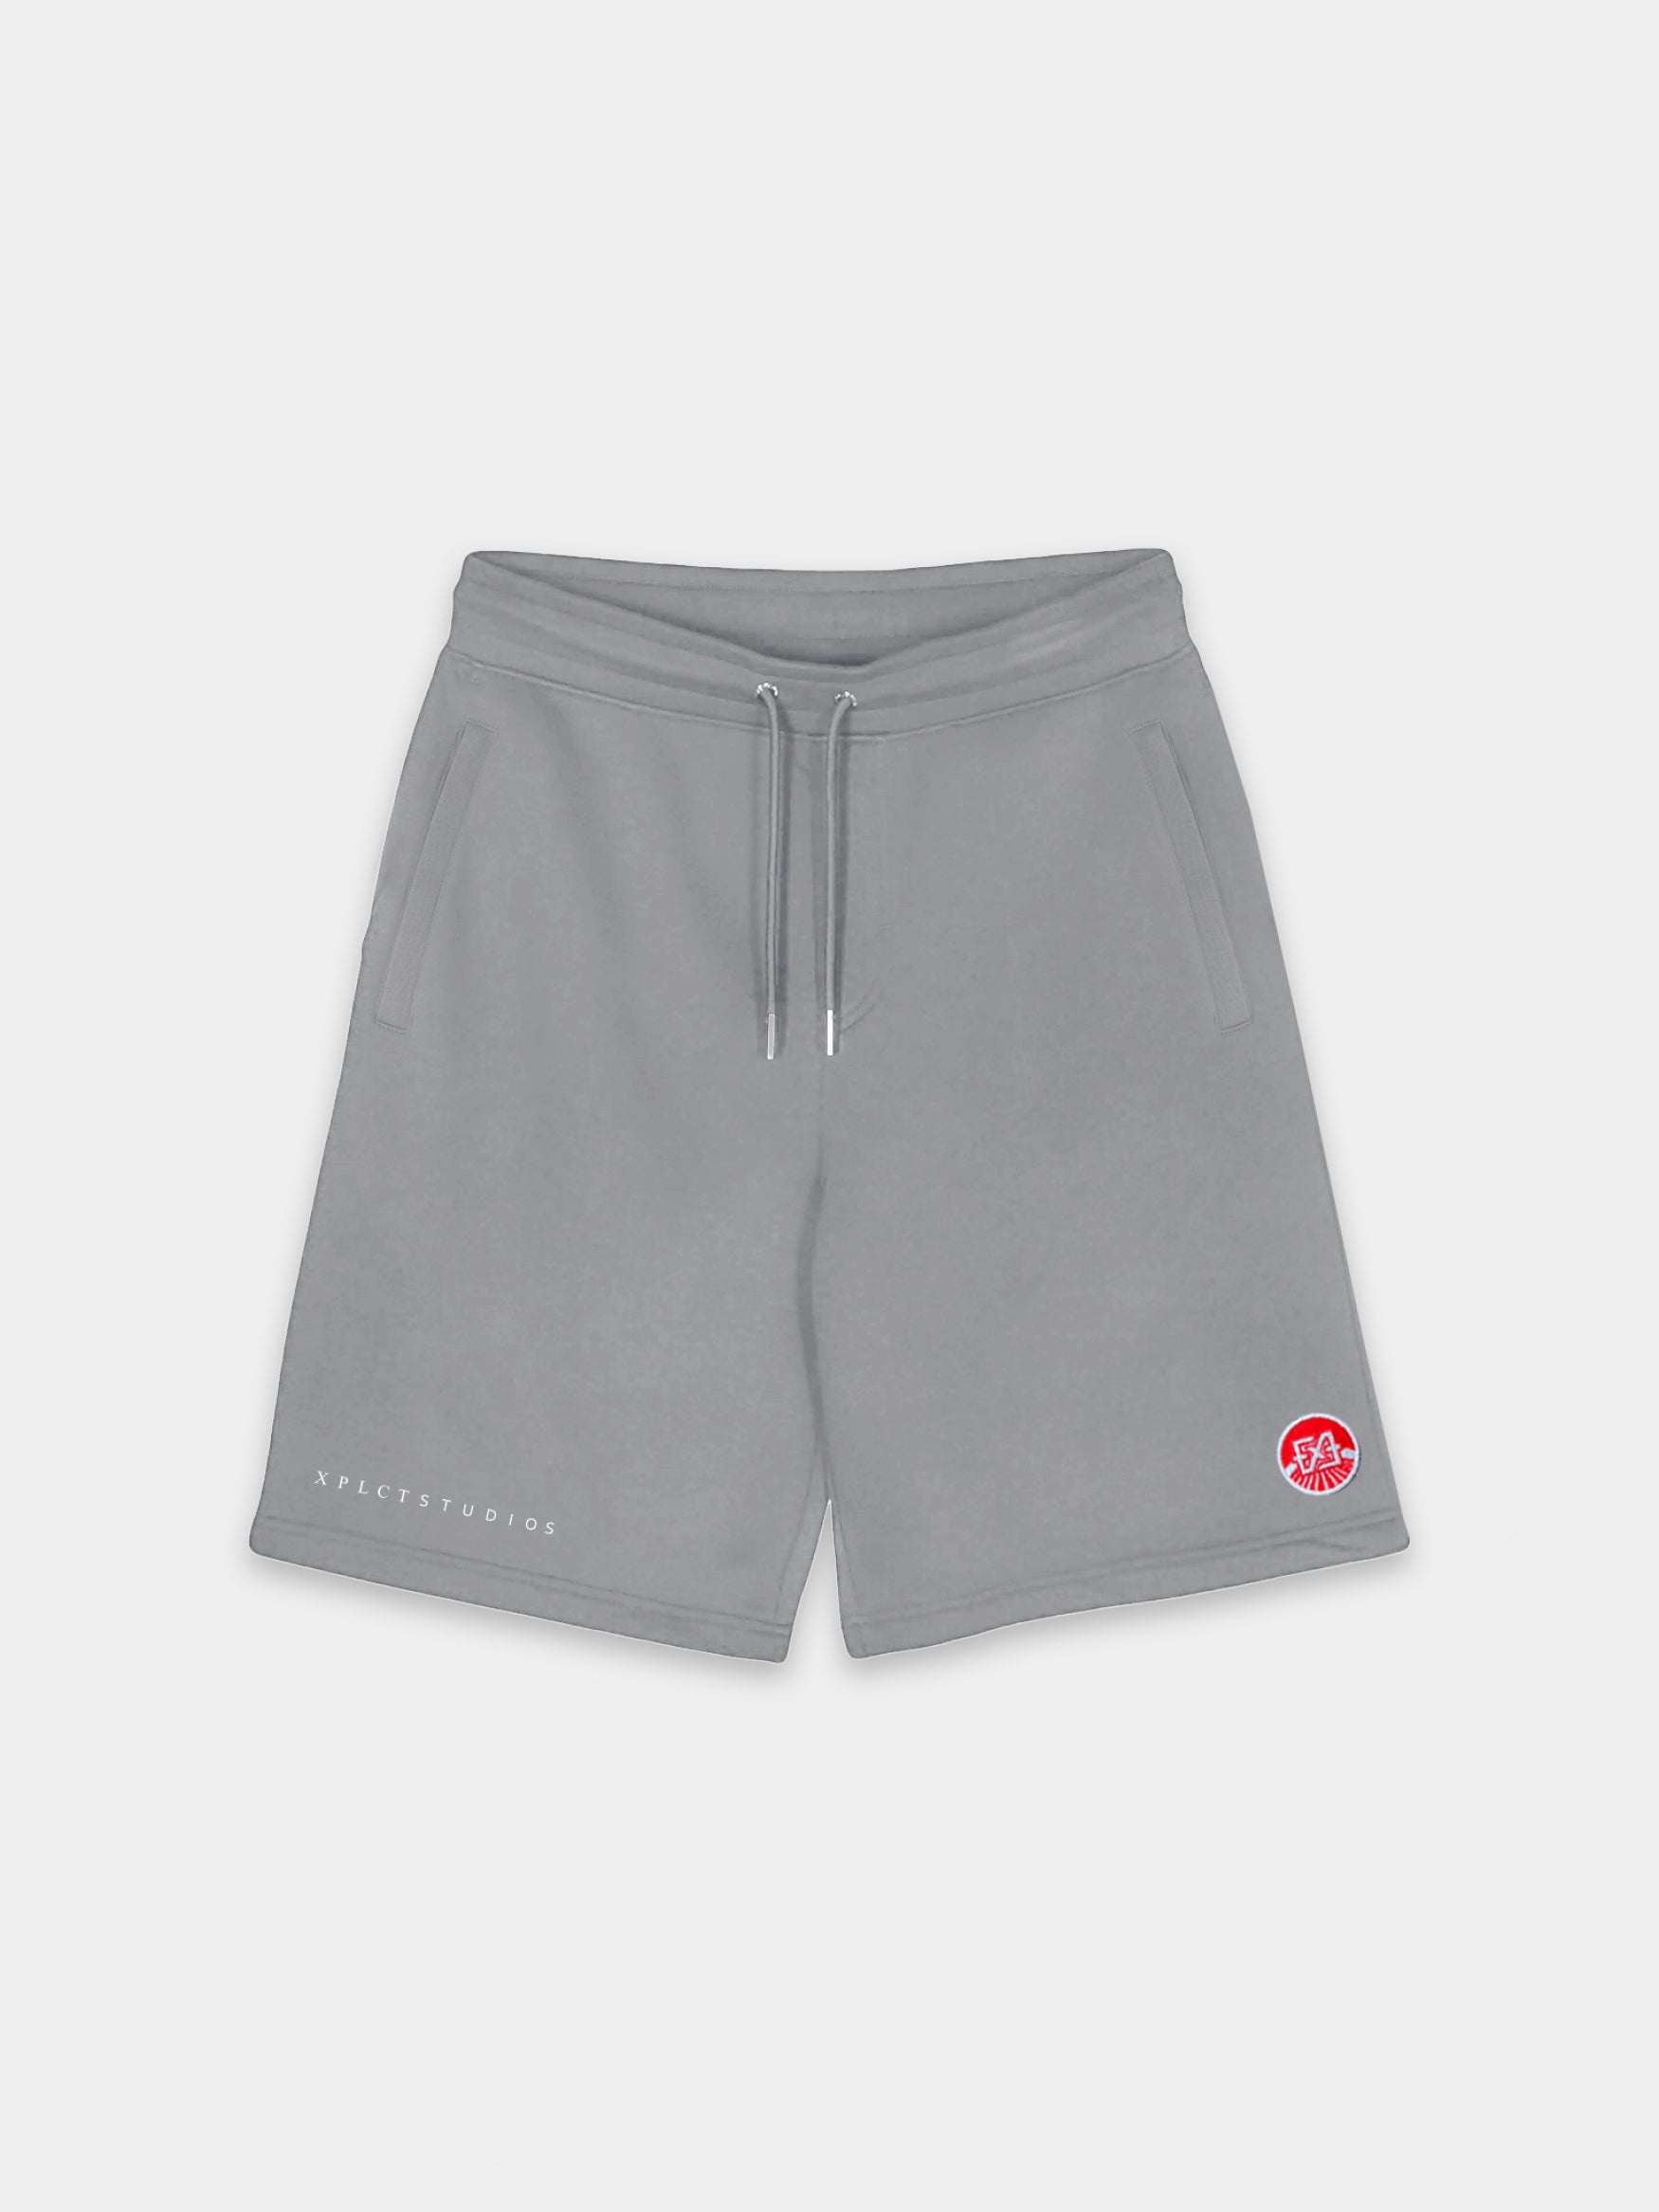 Heritage_Shorts-Grey-front.jpg